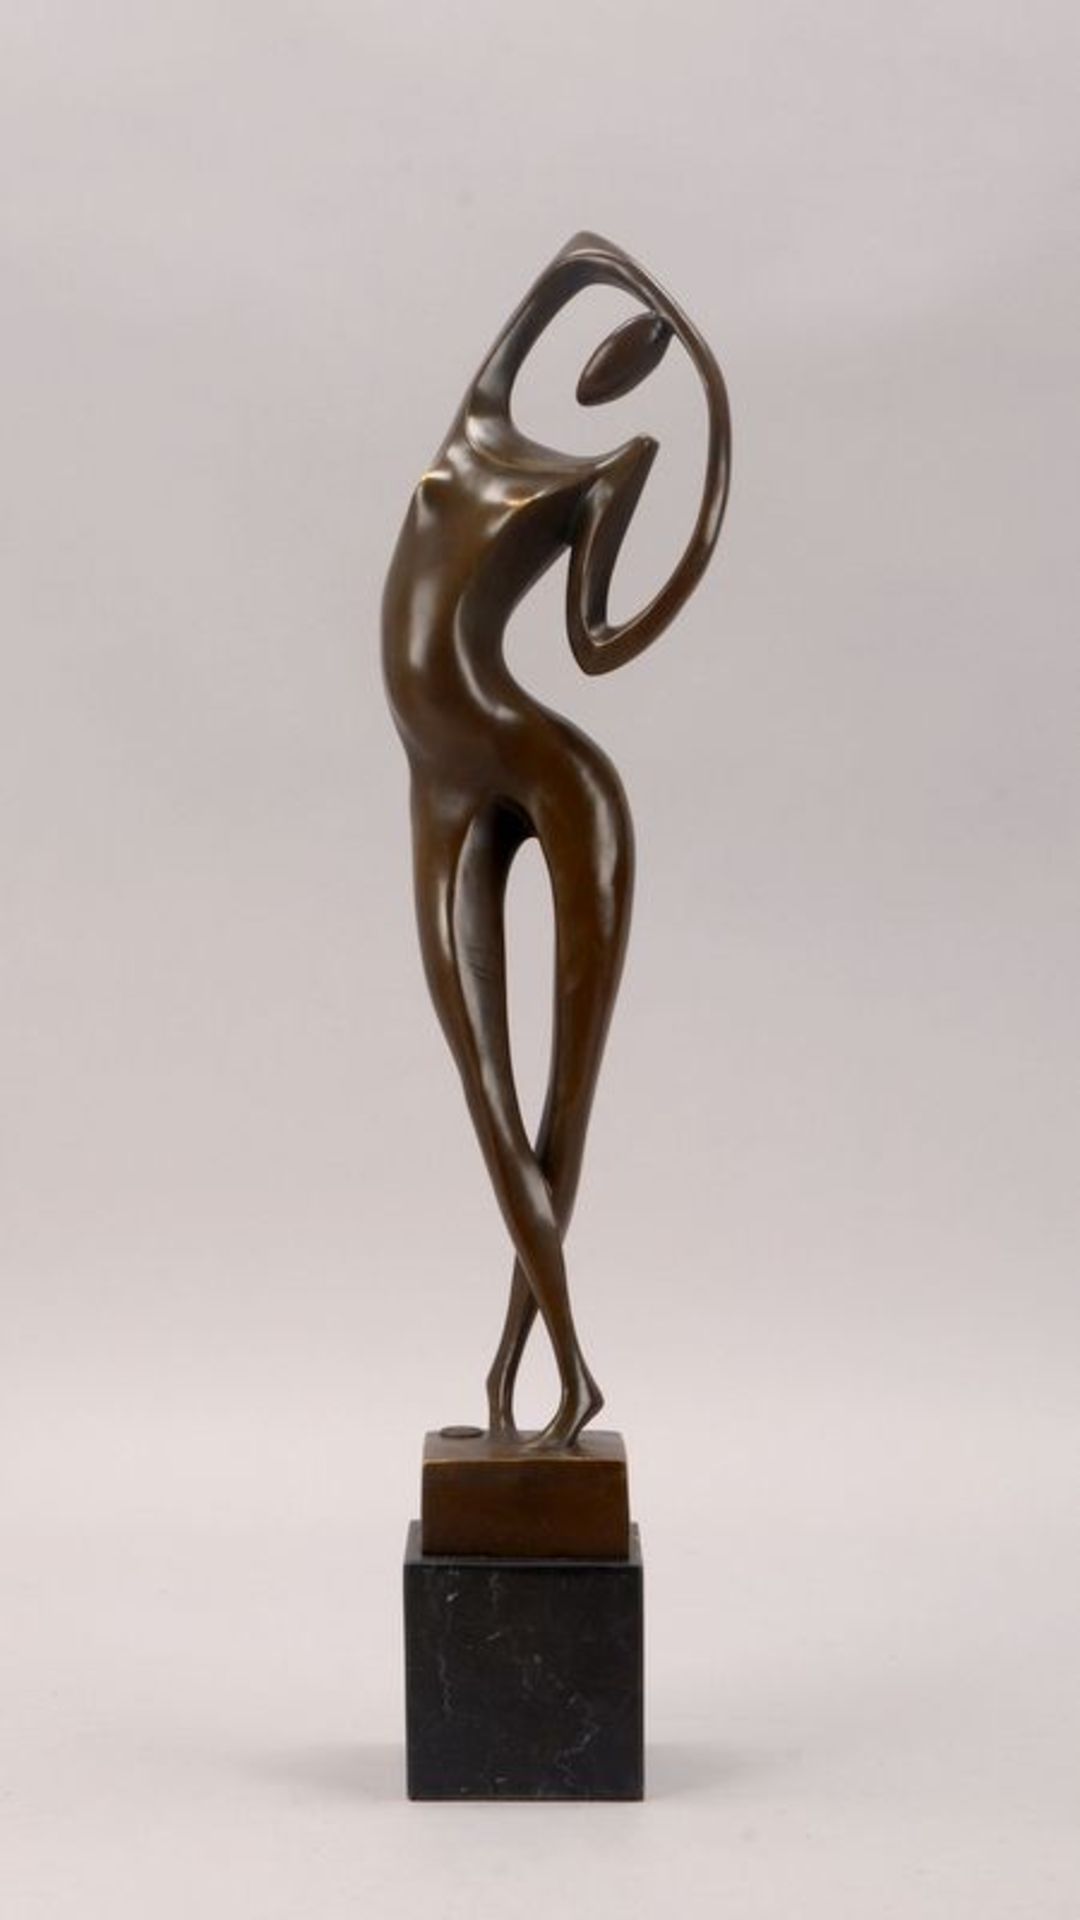 Bronzeskulptur, 'Female Nude', Figur auf quadratischem Marmorsockel, signiert 'Milo', mit